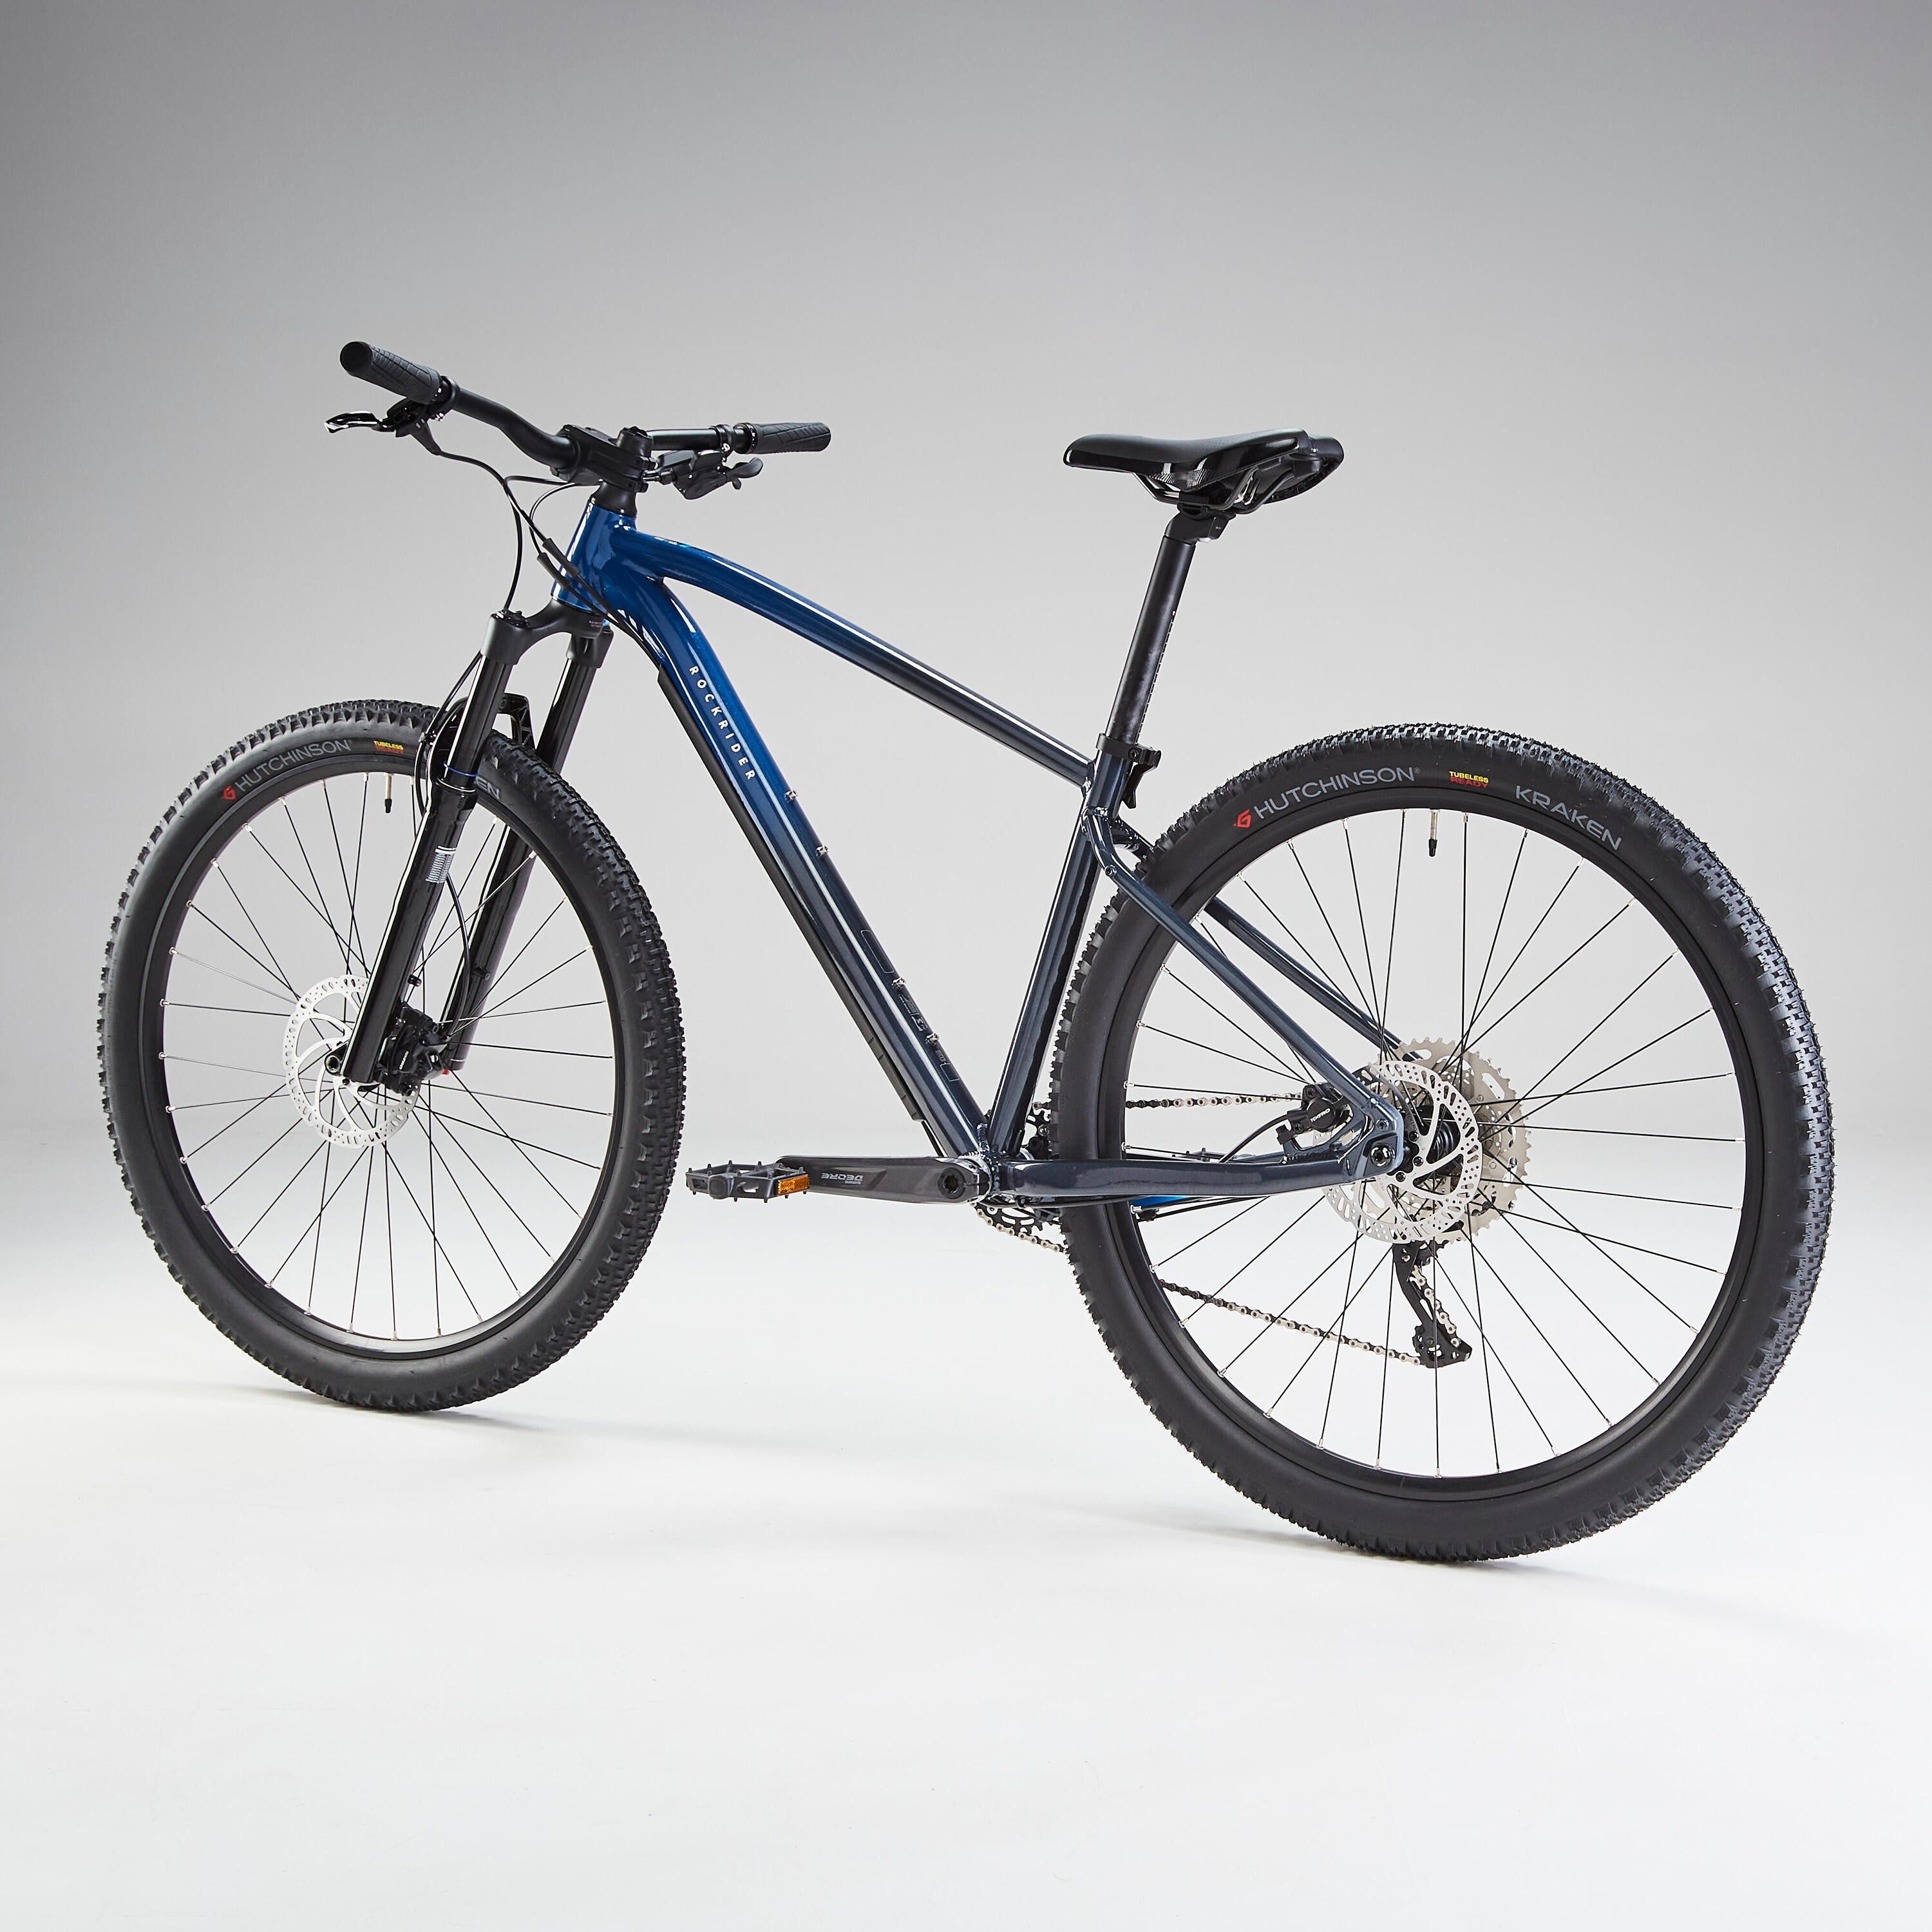 29" Touring Mountain Bike Explore 540 - Blue/Black 3/13